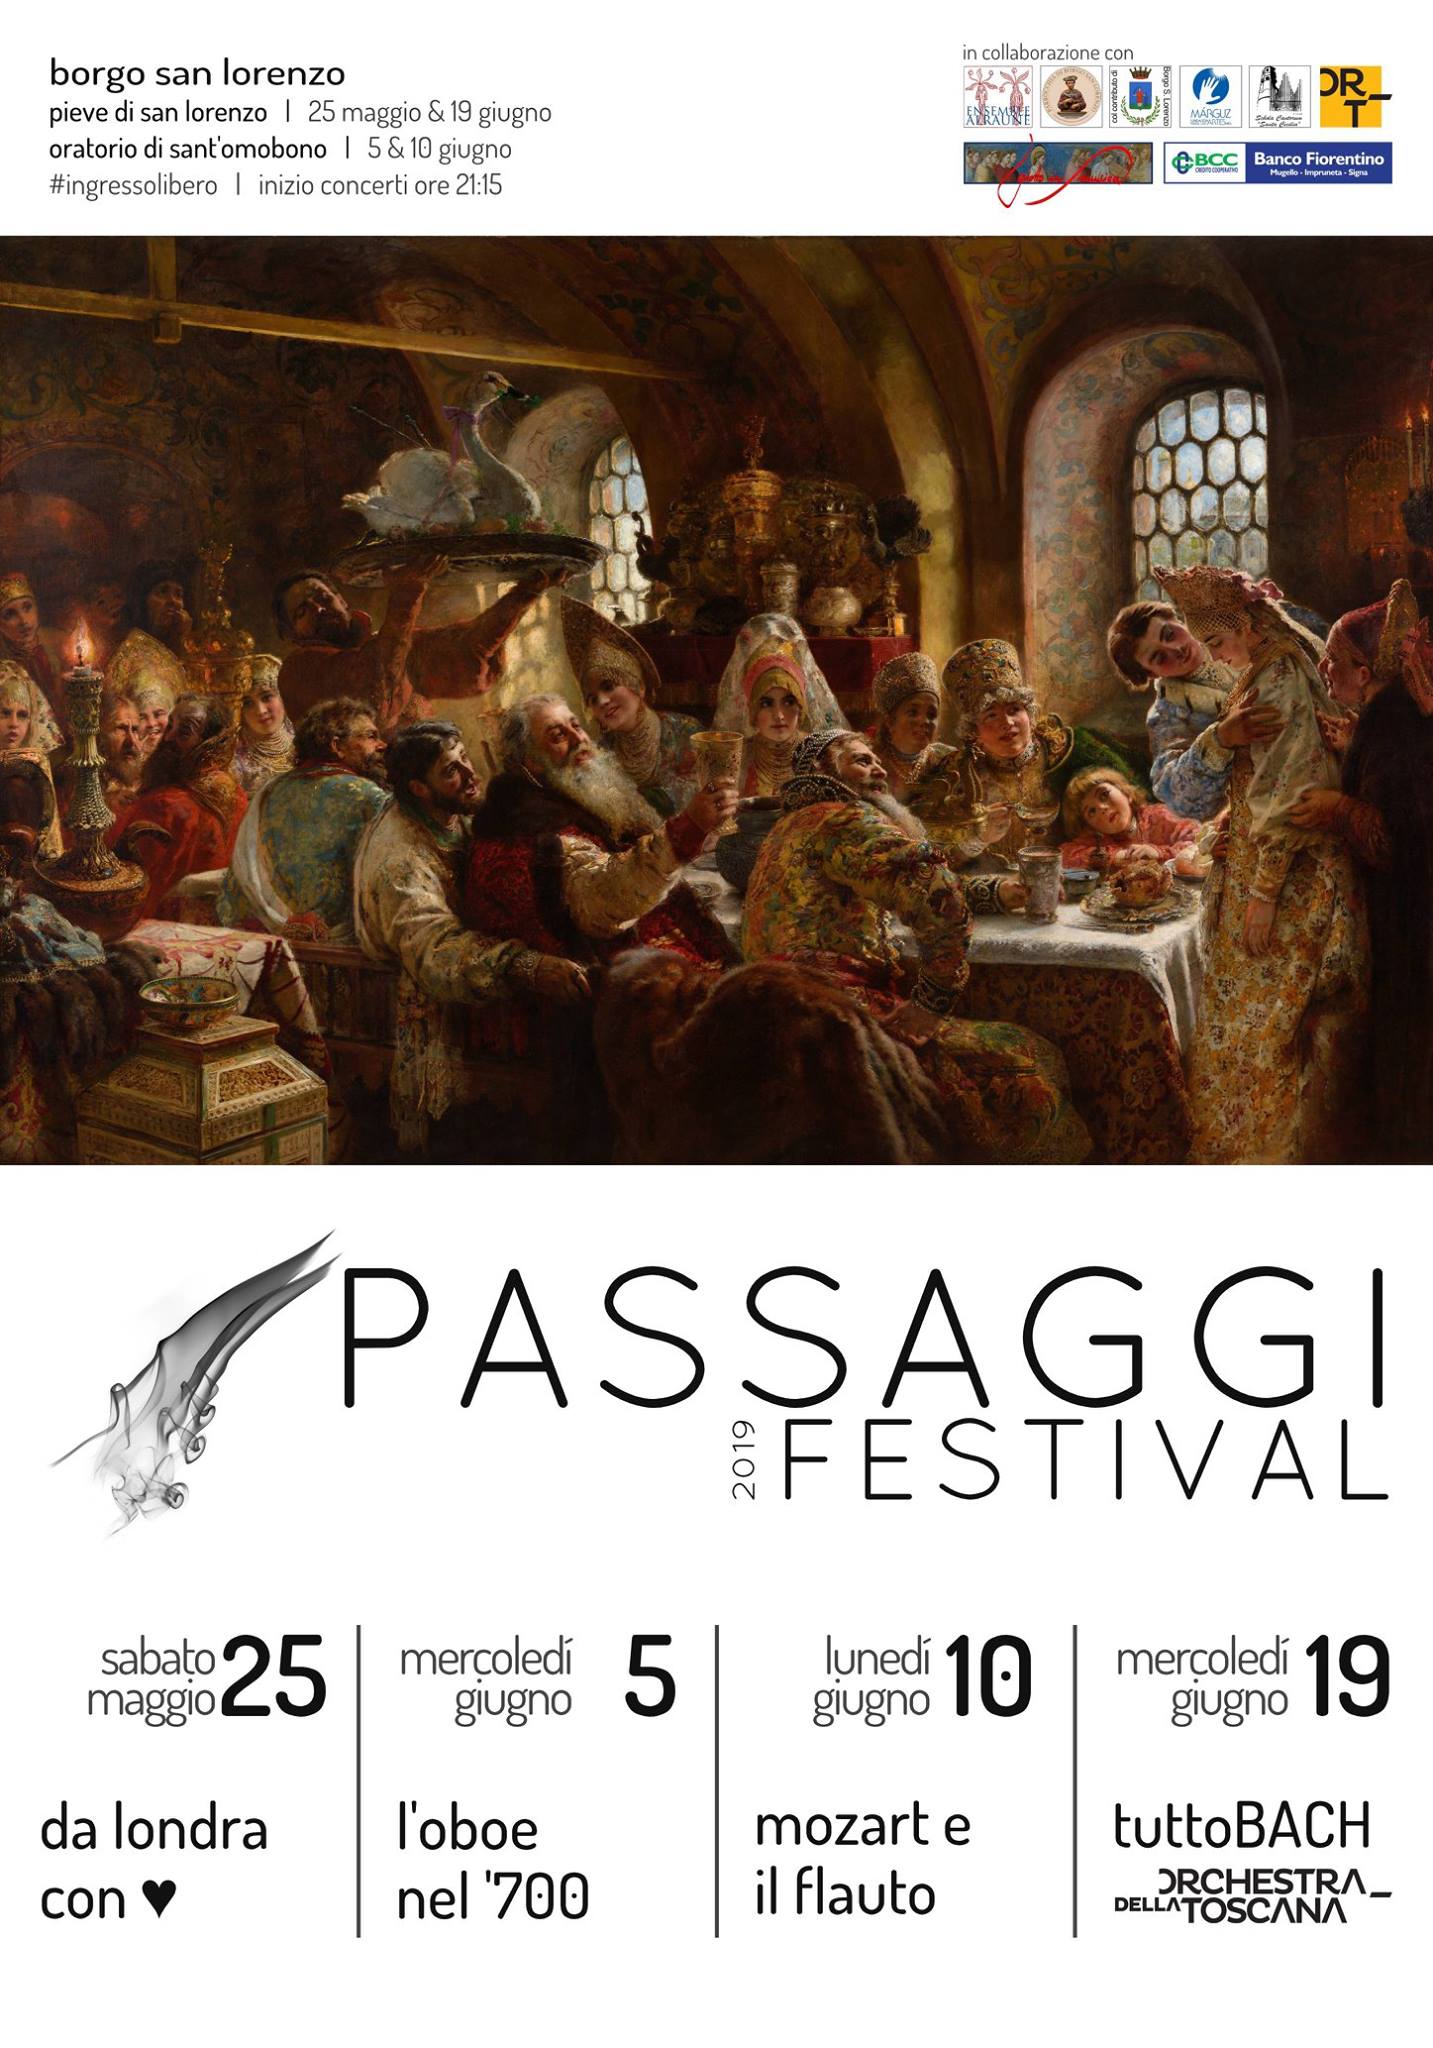 Passaggi Festival